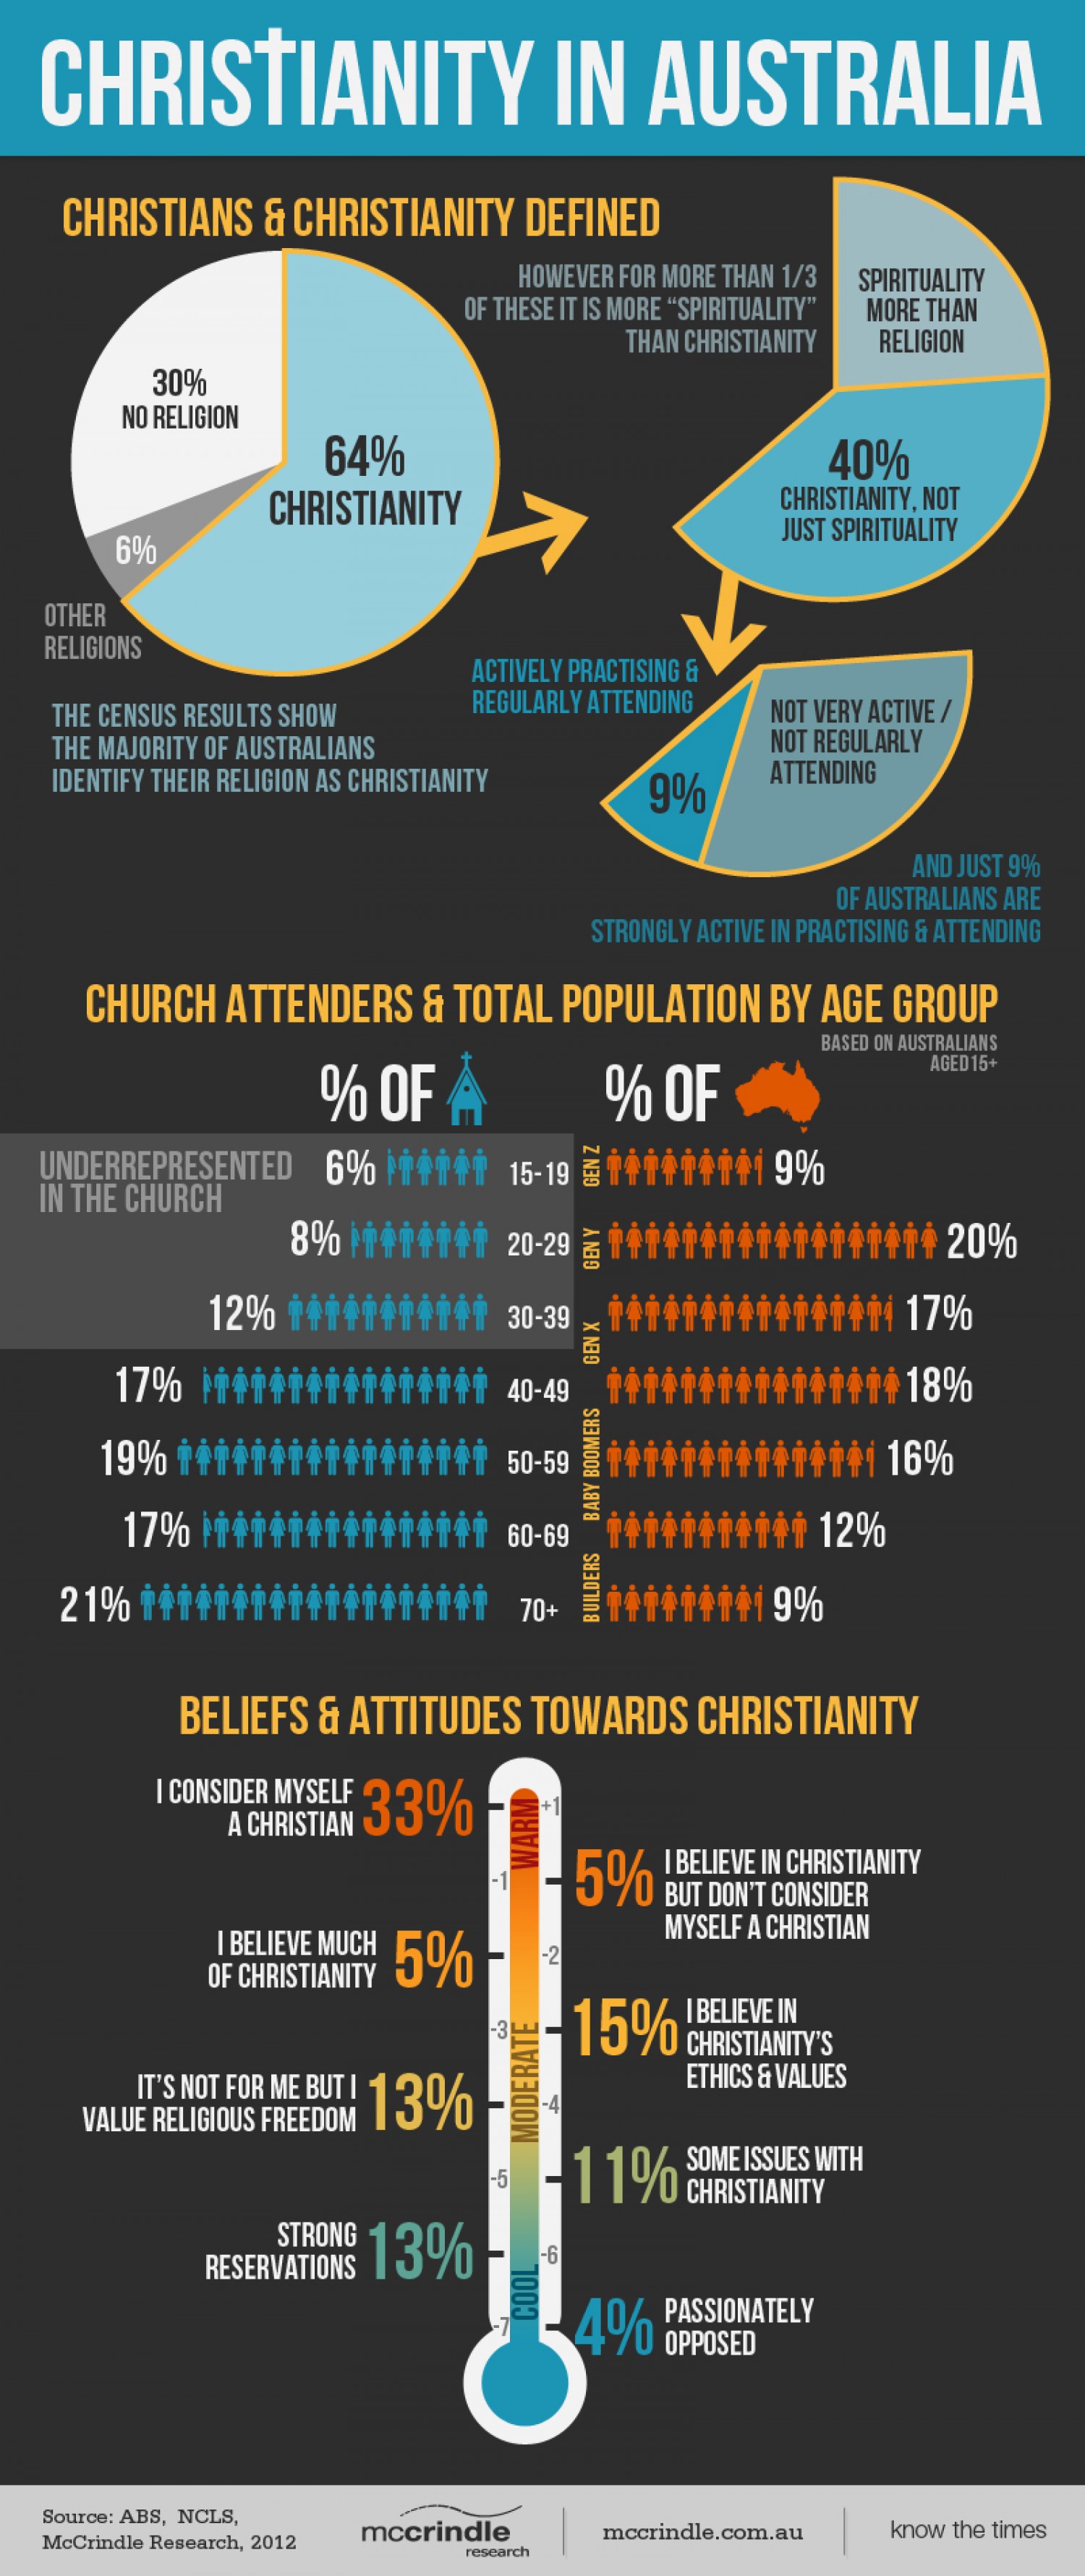 17. Christianity in Australia